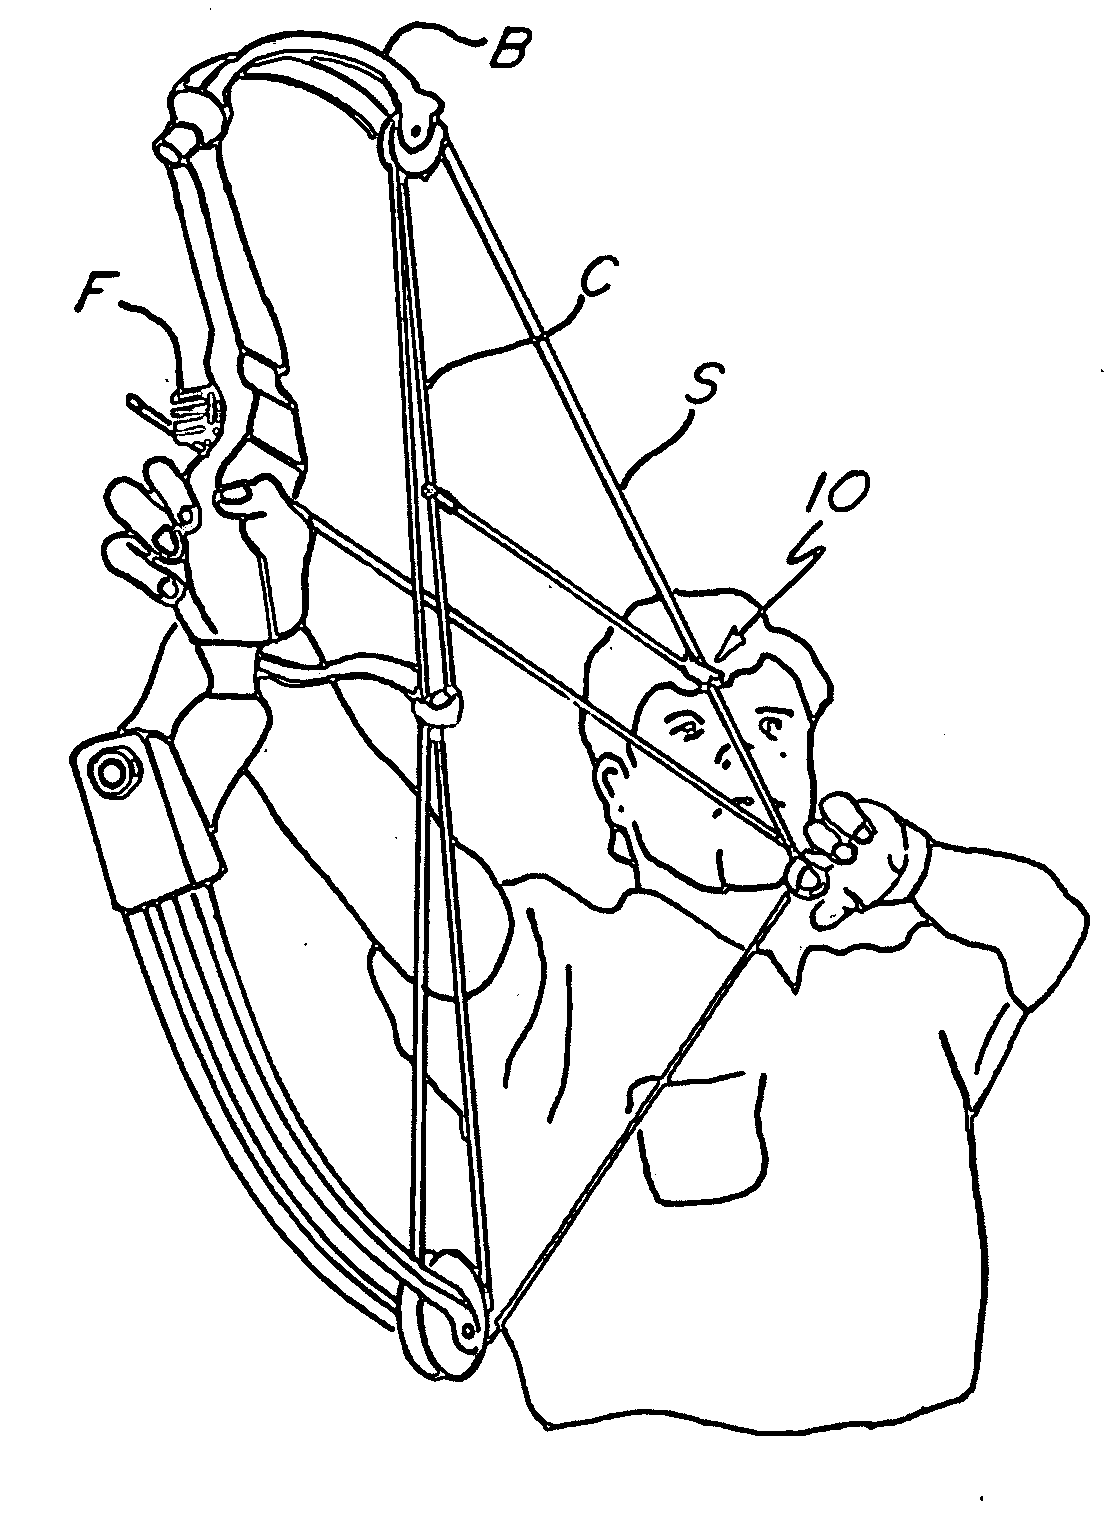 Archery peep sight system